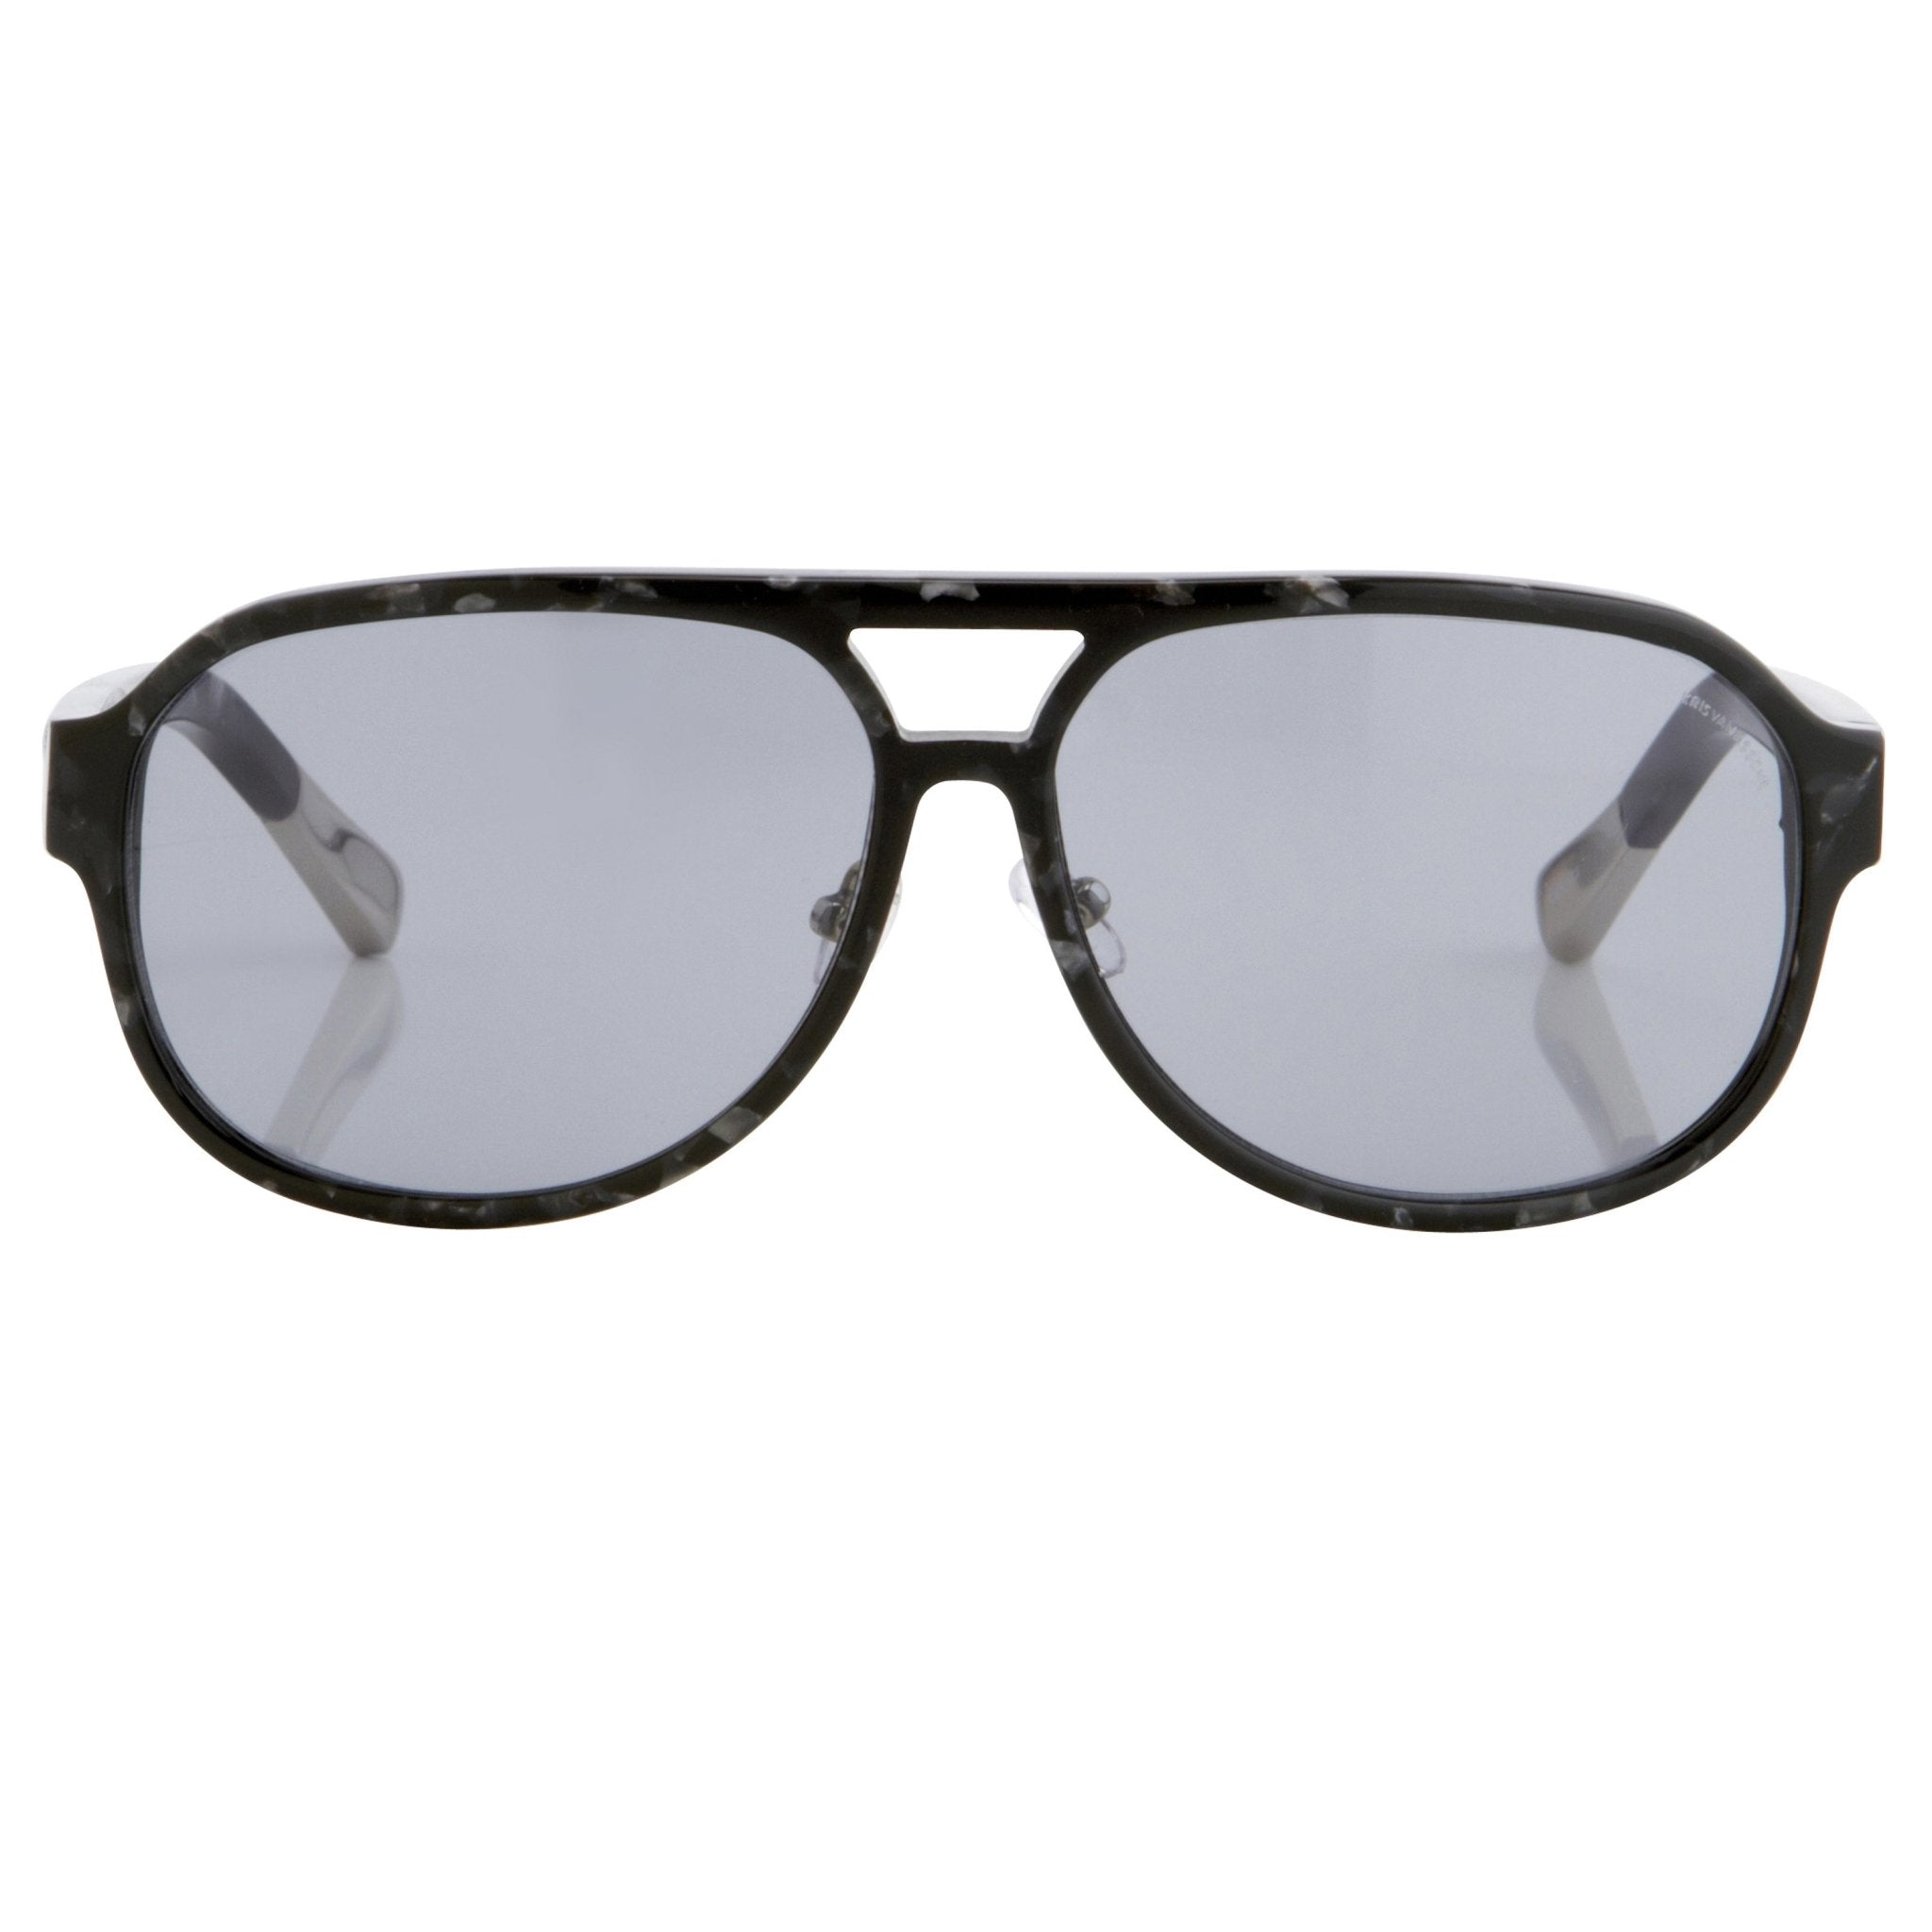 OLIVER PEOPLES Sunglasses KRISVANASSCHE with Extra Polarized lenses Brand  New | eBay